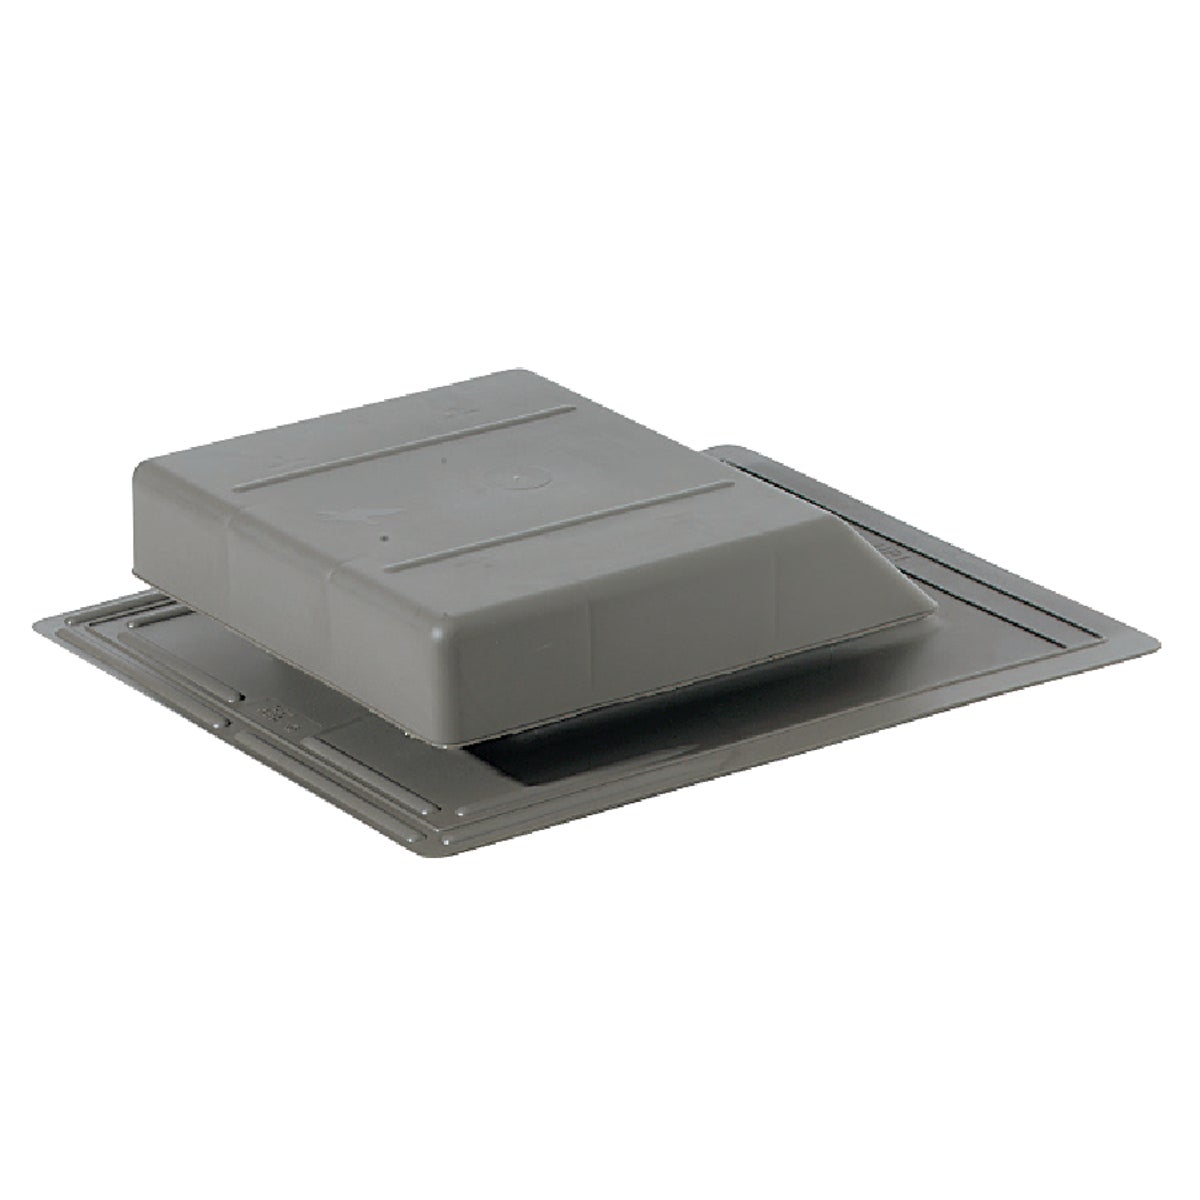 Item 114928, 61" low profile, compact slant back roof vent.